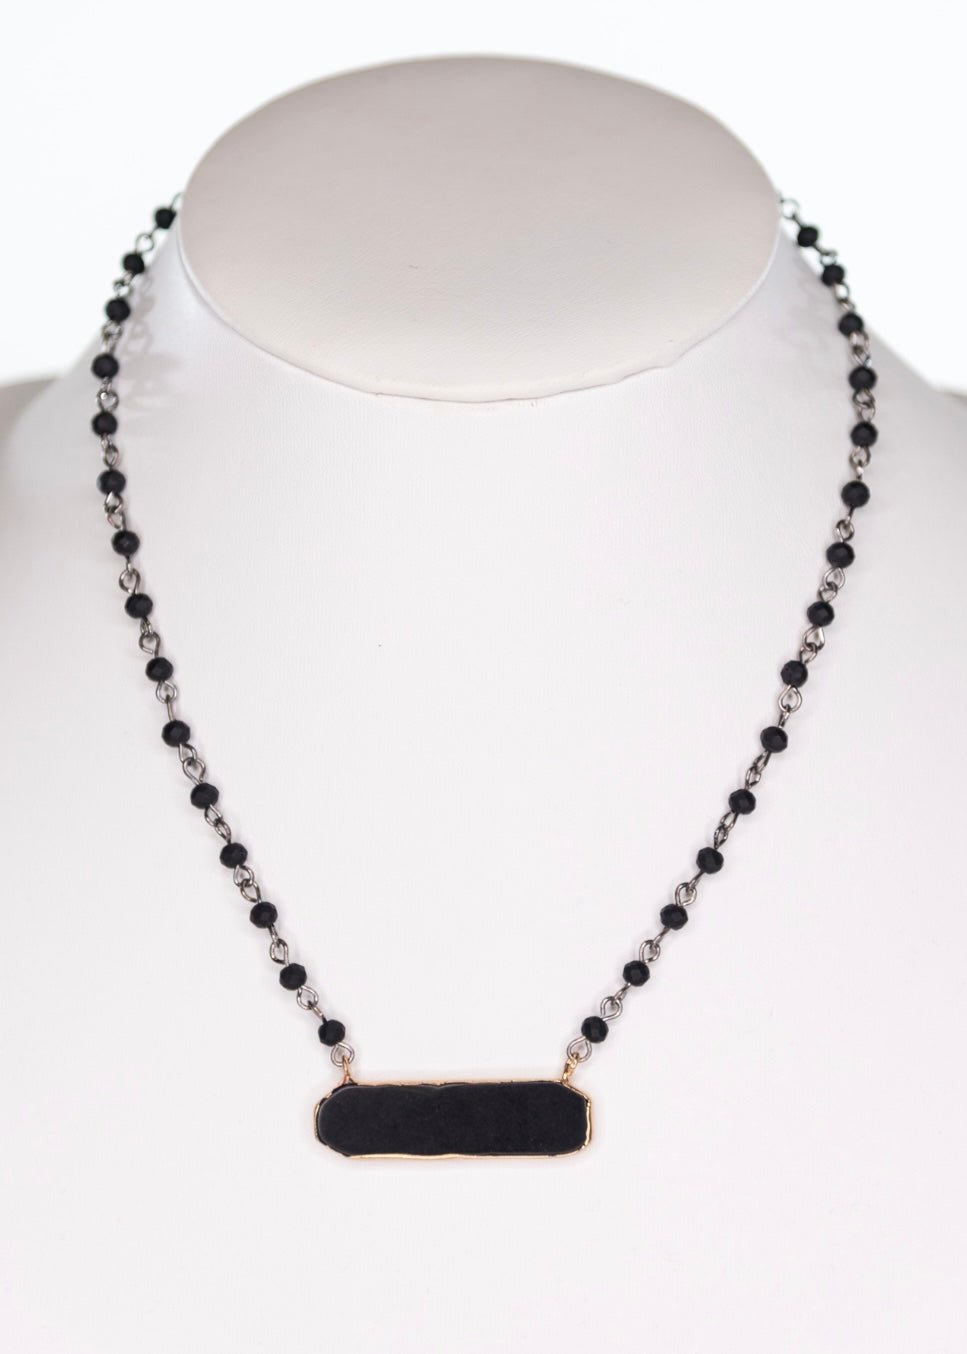 Charlotte Necklace - Black - necklace - Jimberly's Boutique